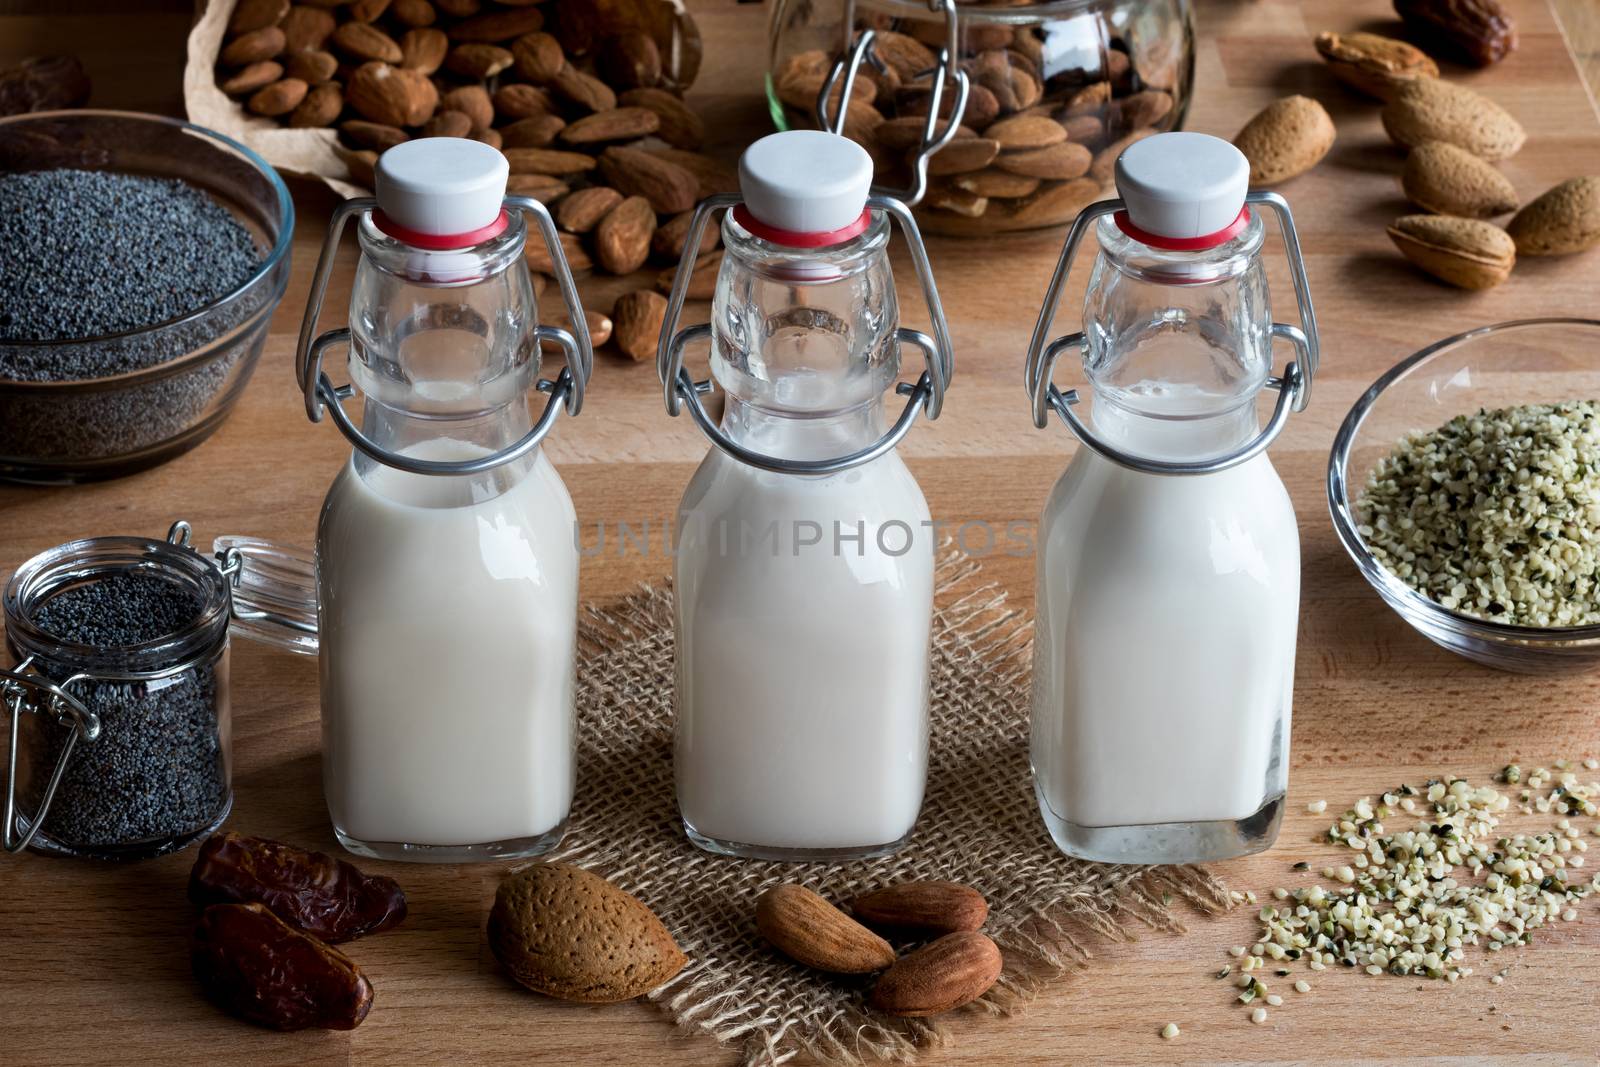 Vegan plant milks - almond milk, poppy seed milk and hemp seed m by madeleine_steinbach